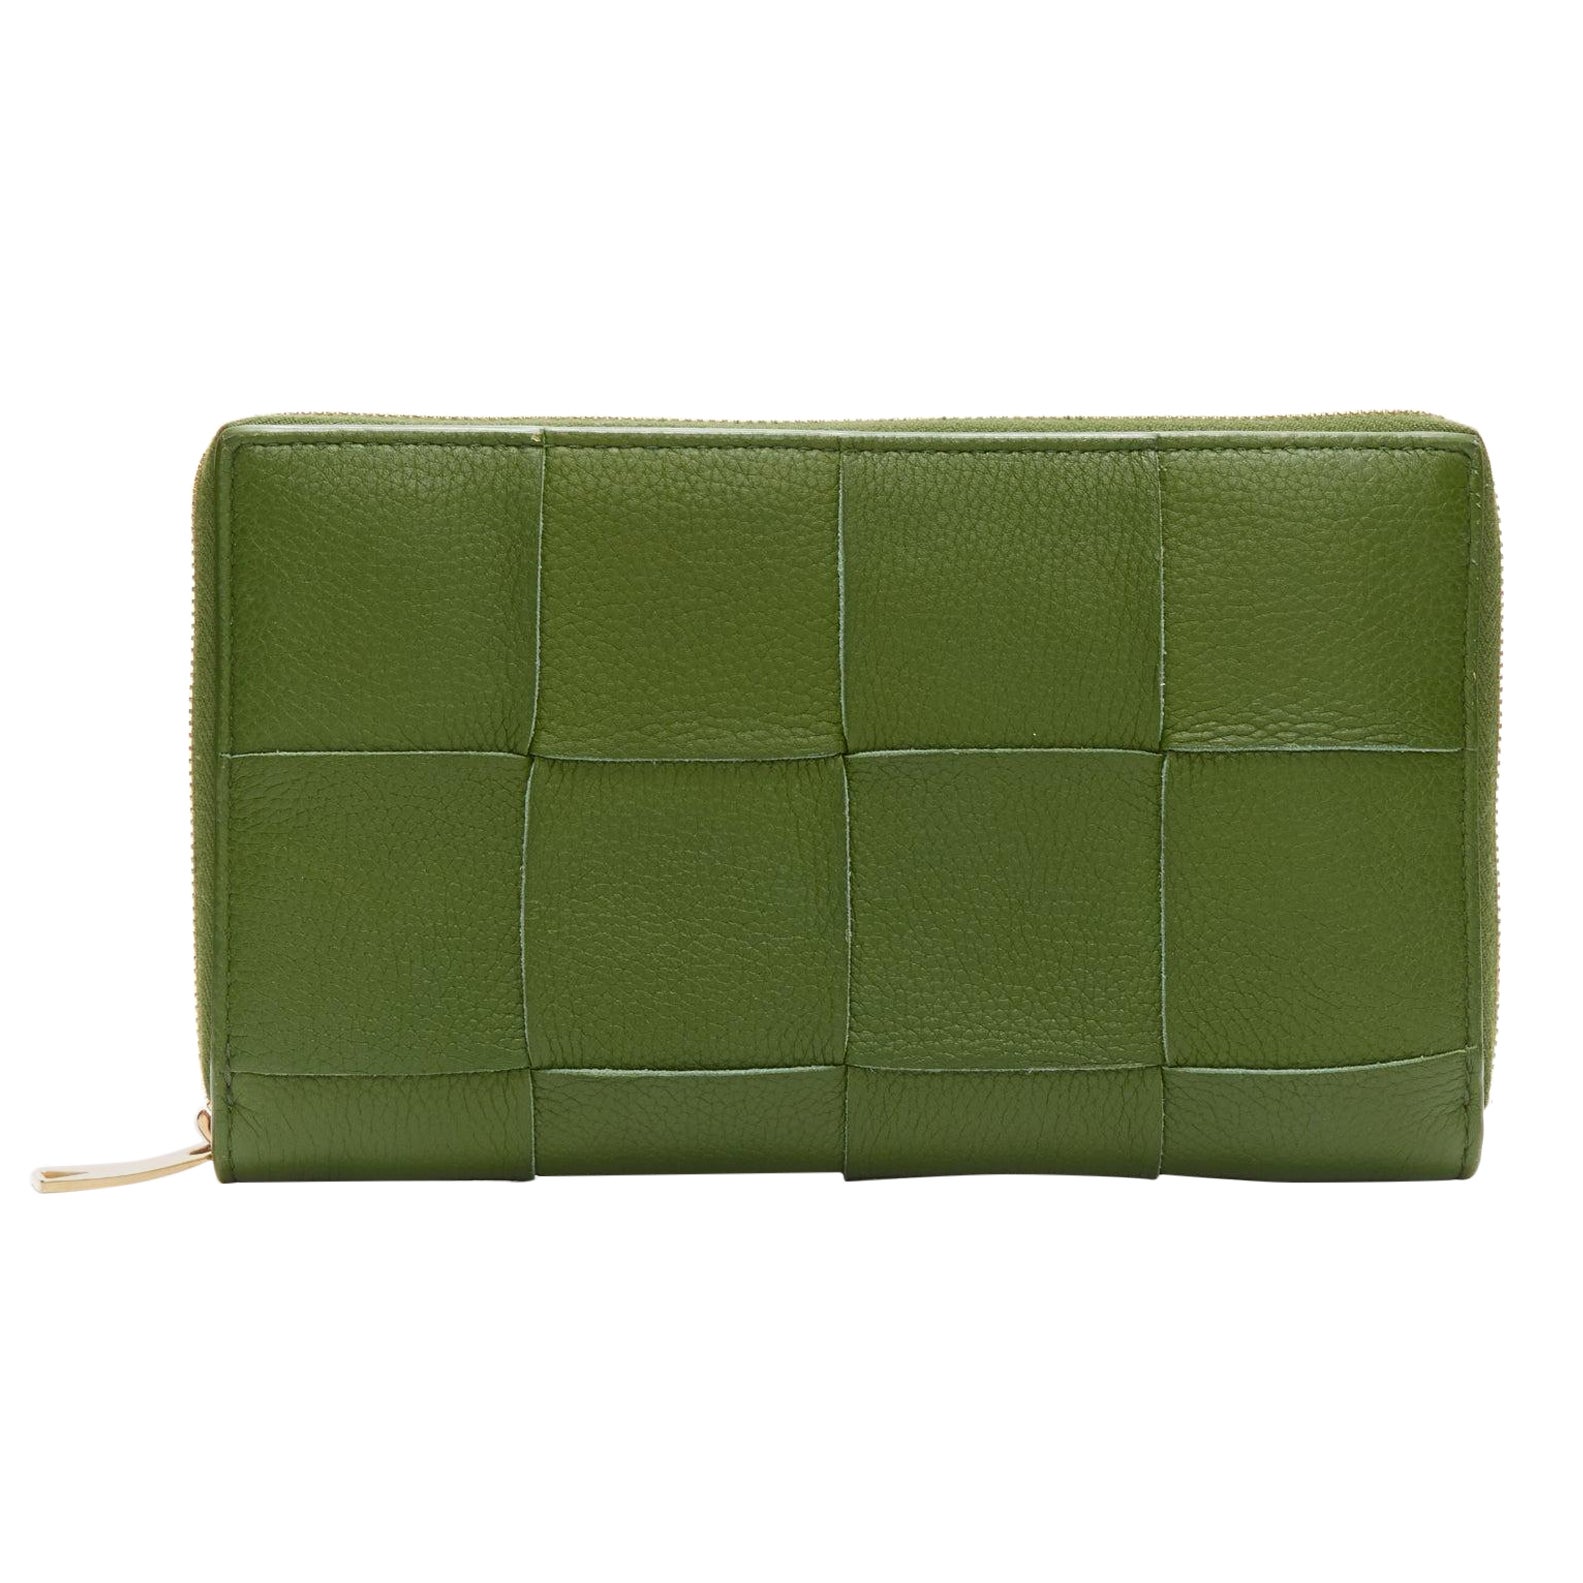 BOTTEGA VENETA Cassette avocado green maxi Intrecciato zip around long wallet For Sale